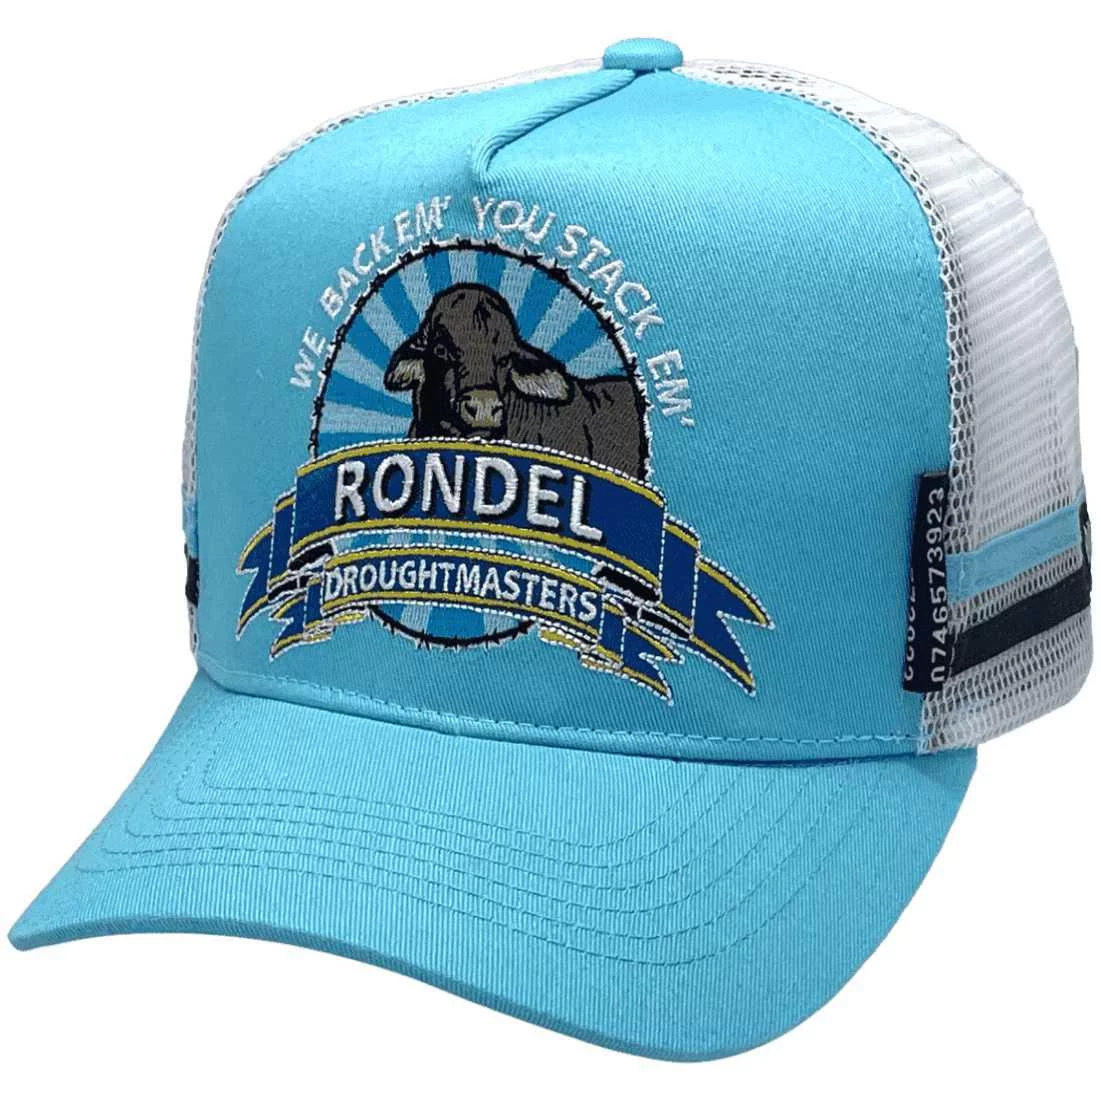 Rondel Droughtmasters Winton Qld HP Midrange Aussie Trucker Hat with exclusive Australian Head Fit Crown Size